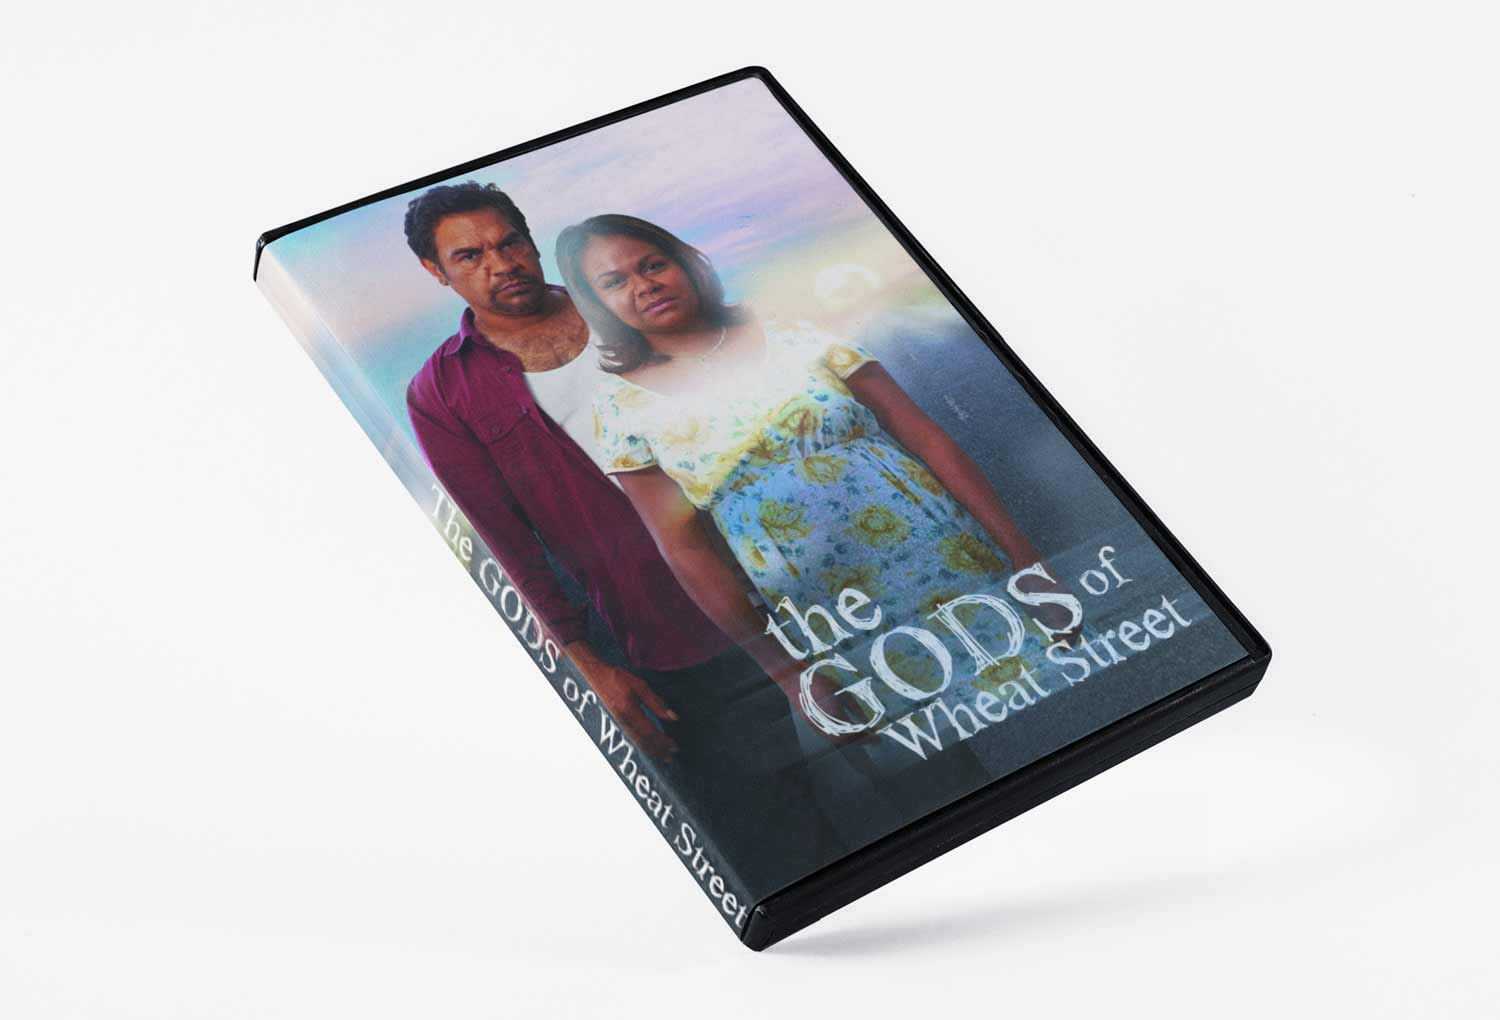 Gods Of Wheat Street DVD CASE TV Graphic Design By Mango Tree Media